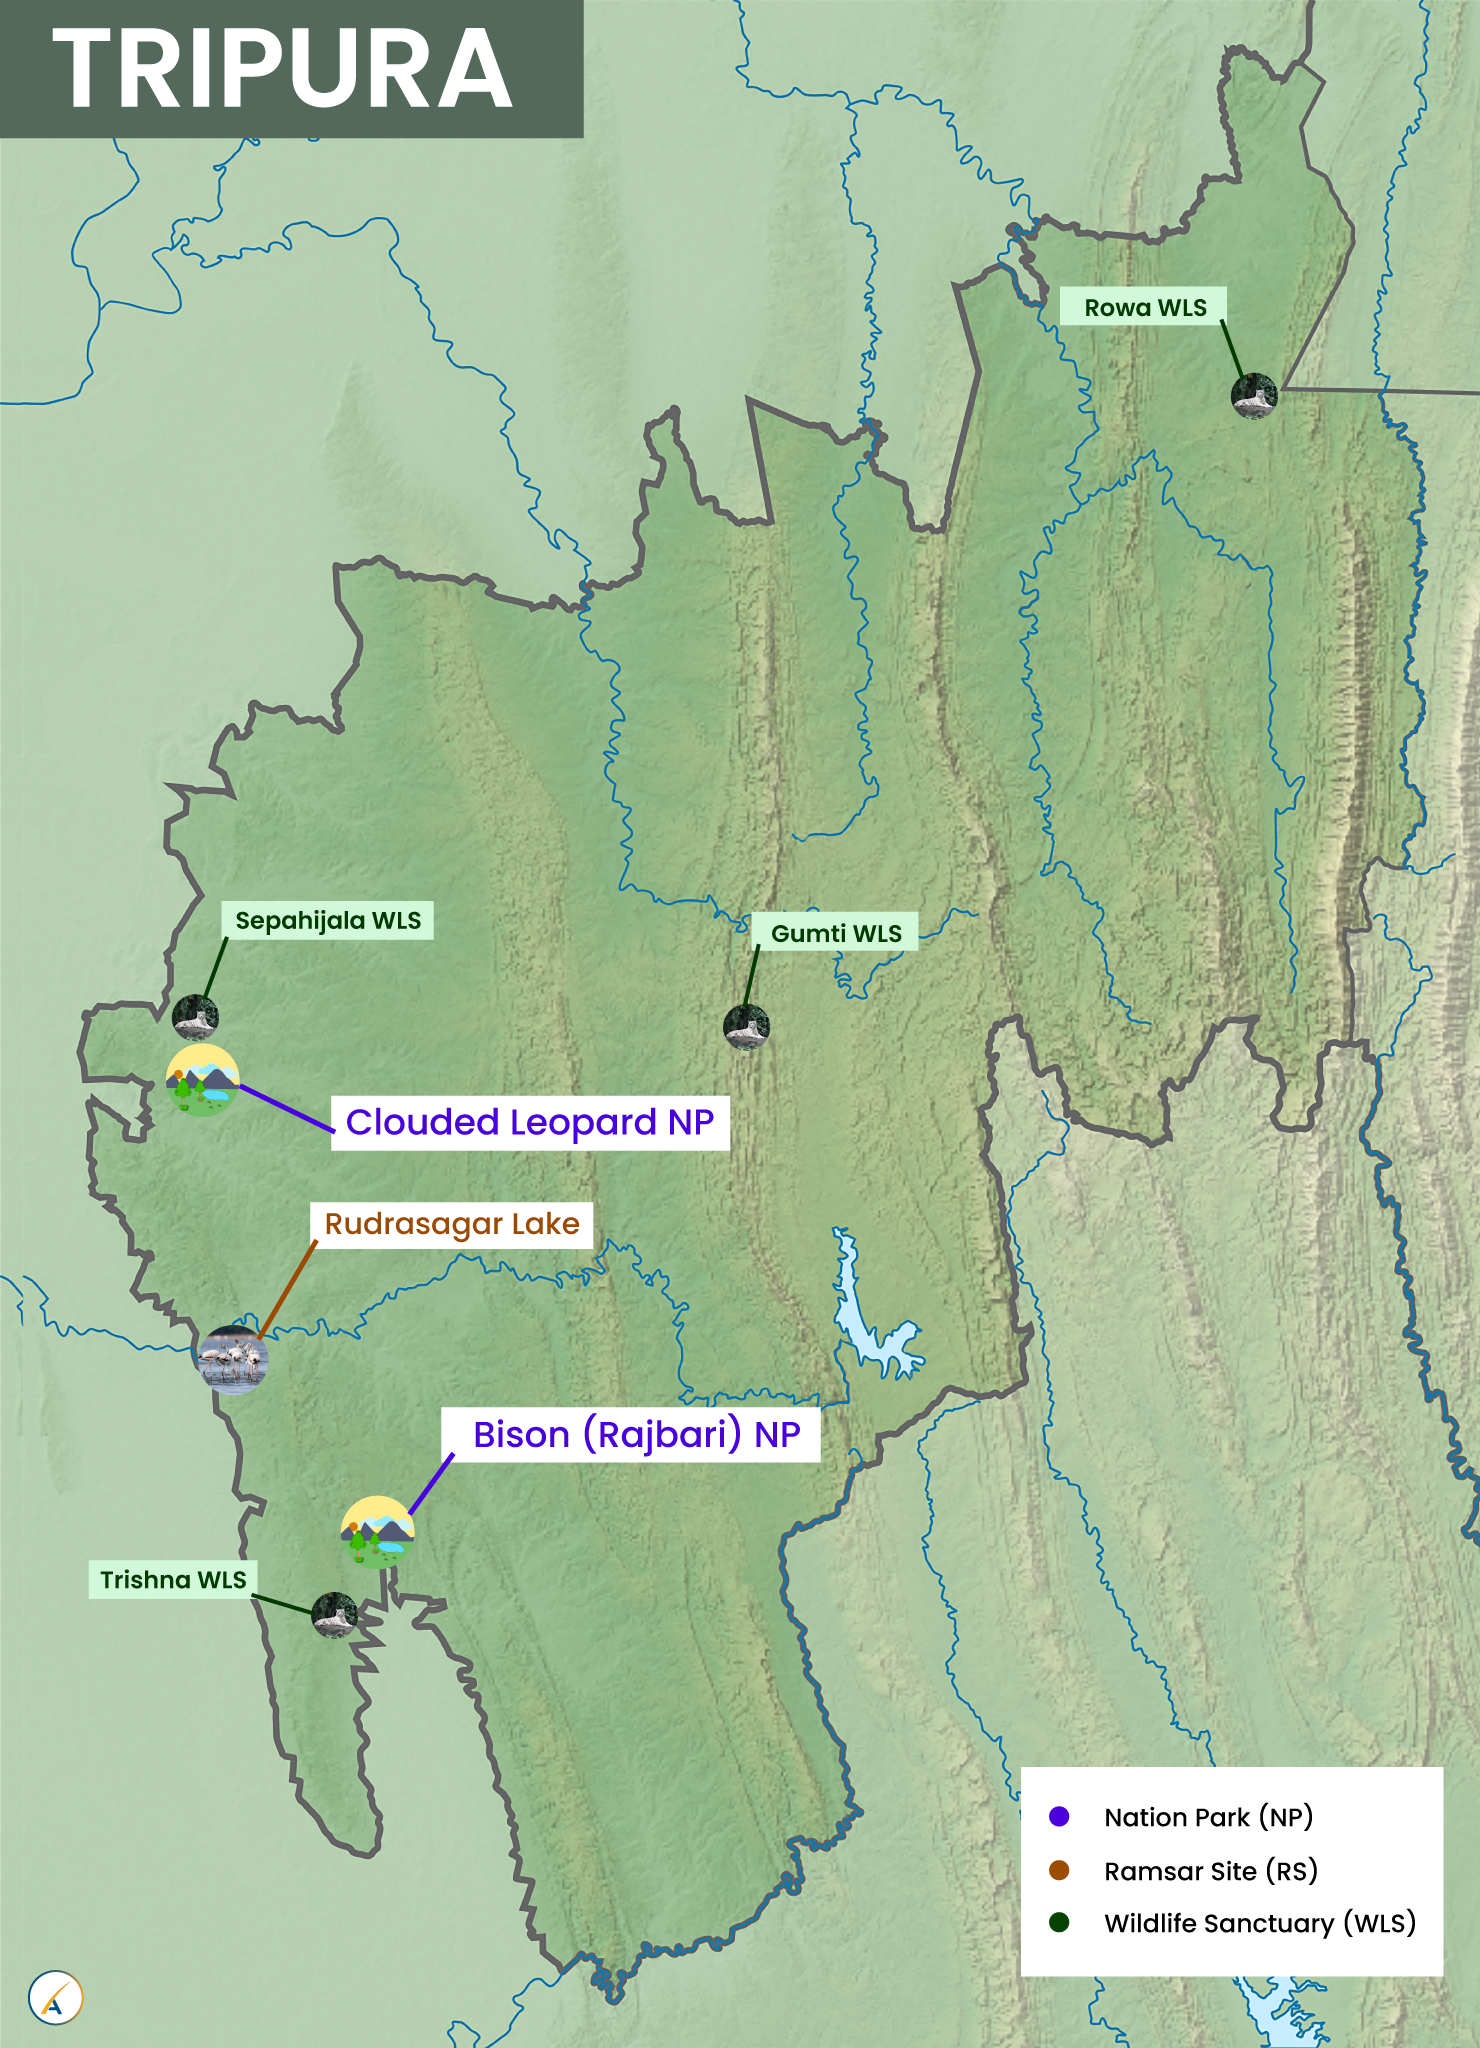 Tripura National Parks, Wildlife Sanctuaries & Ramsar Sites Map